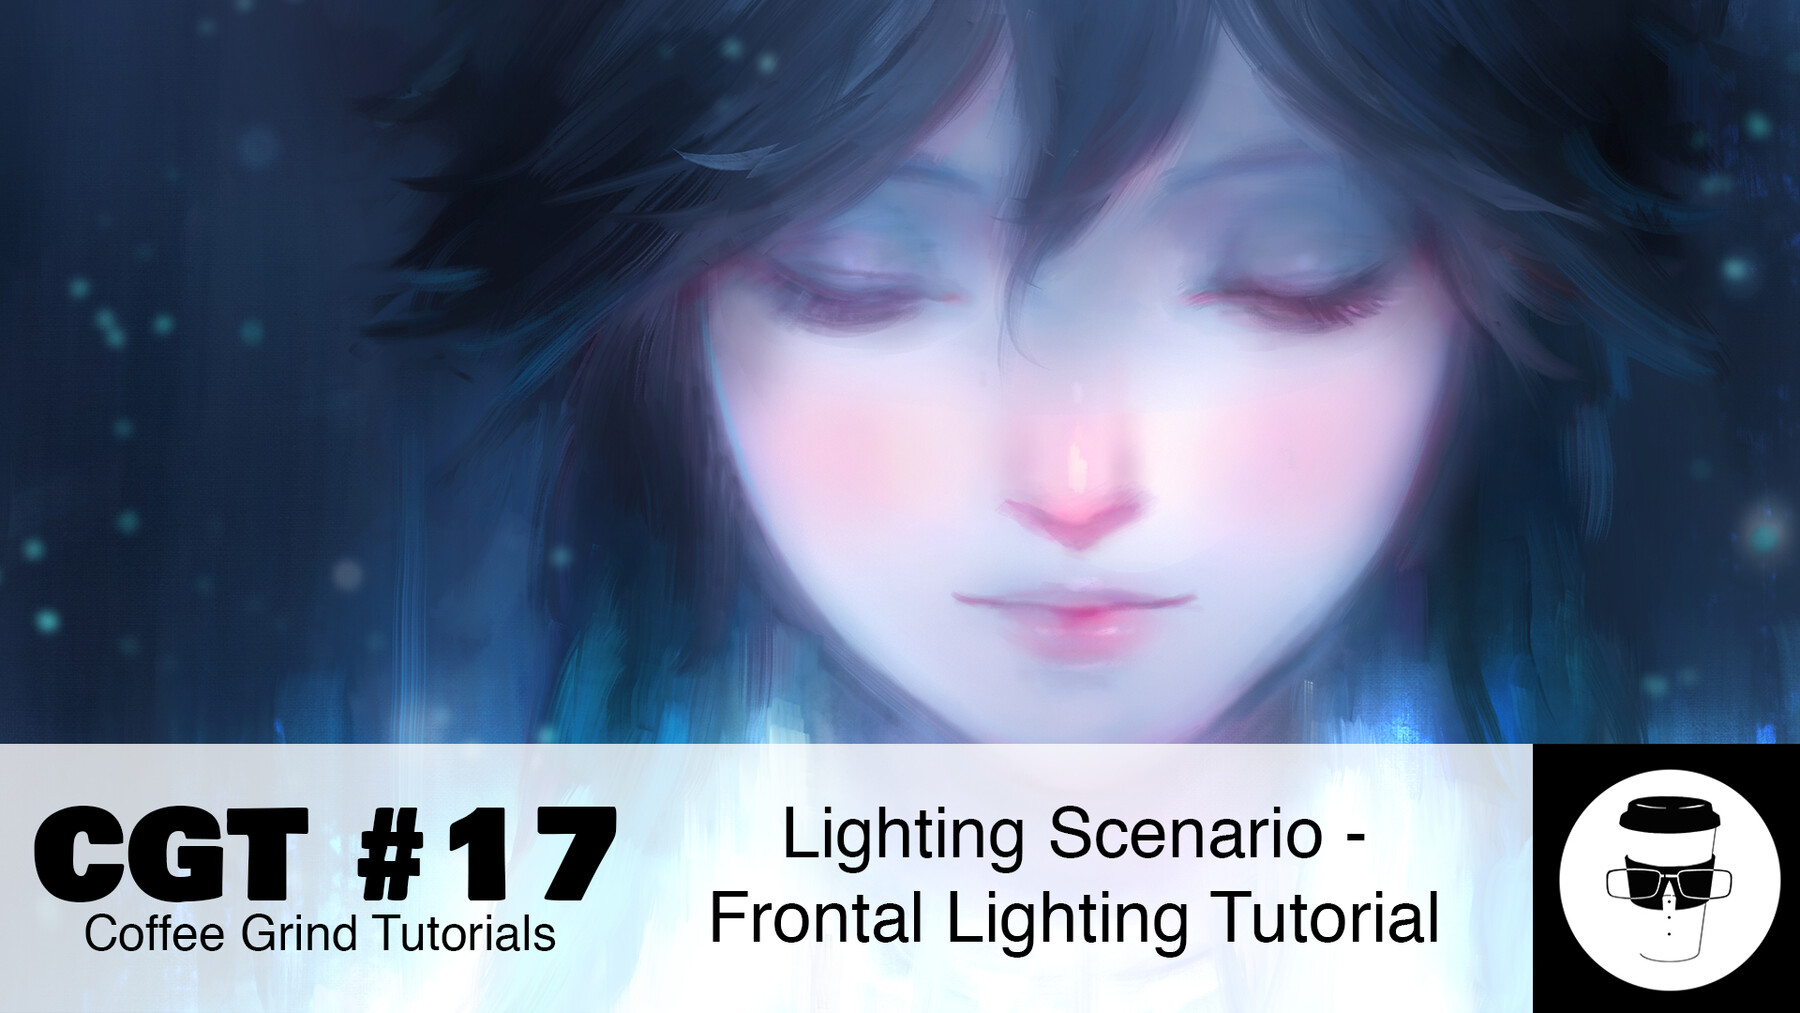 ArtStation - CGT #17: Lighting Scenario - Frontal Lighting Tutorial |  Tutorials